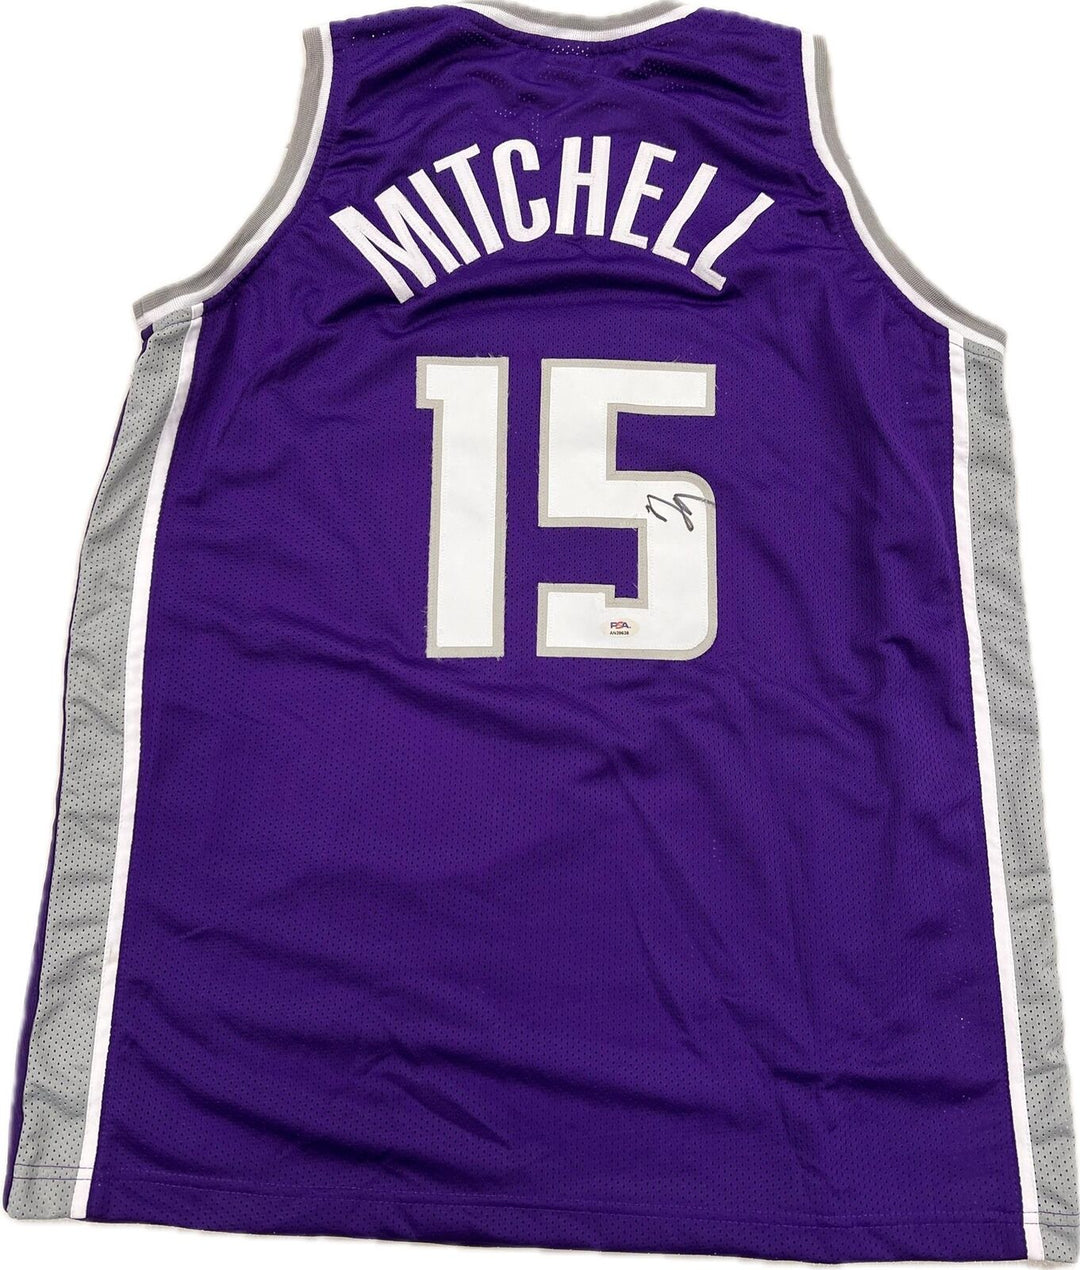 Davion Mitchell signed jersey PSA/DNA Sacramento Kings Autographed Image 1